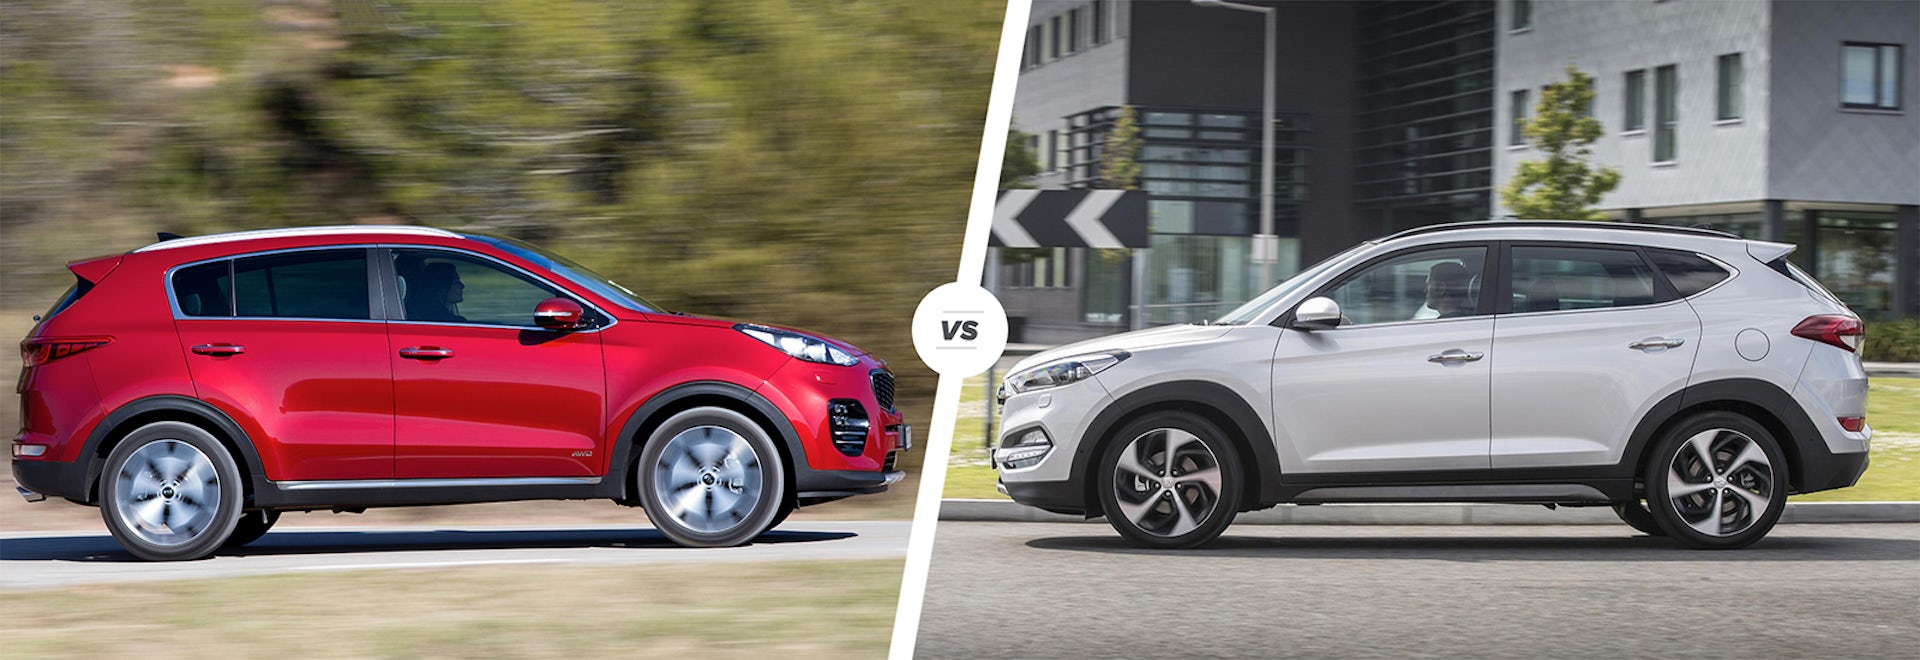 Kia Sportage vs Hyundai Tucson comparison carwow